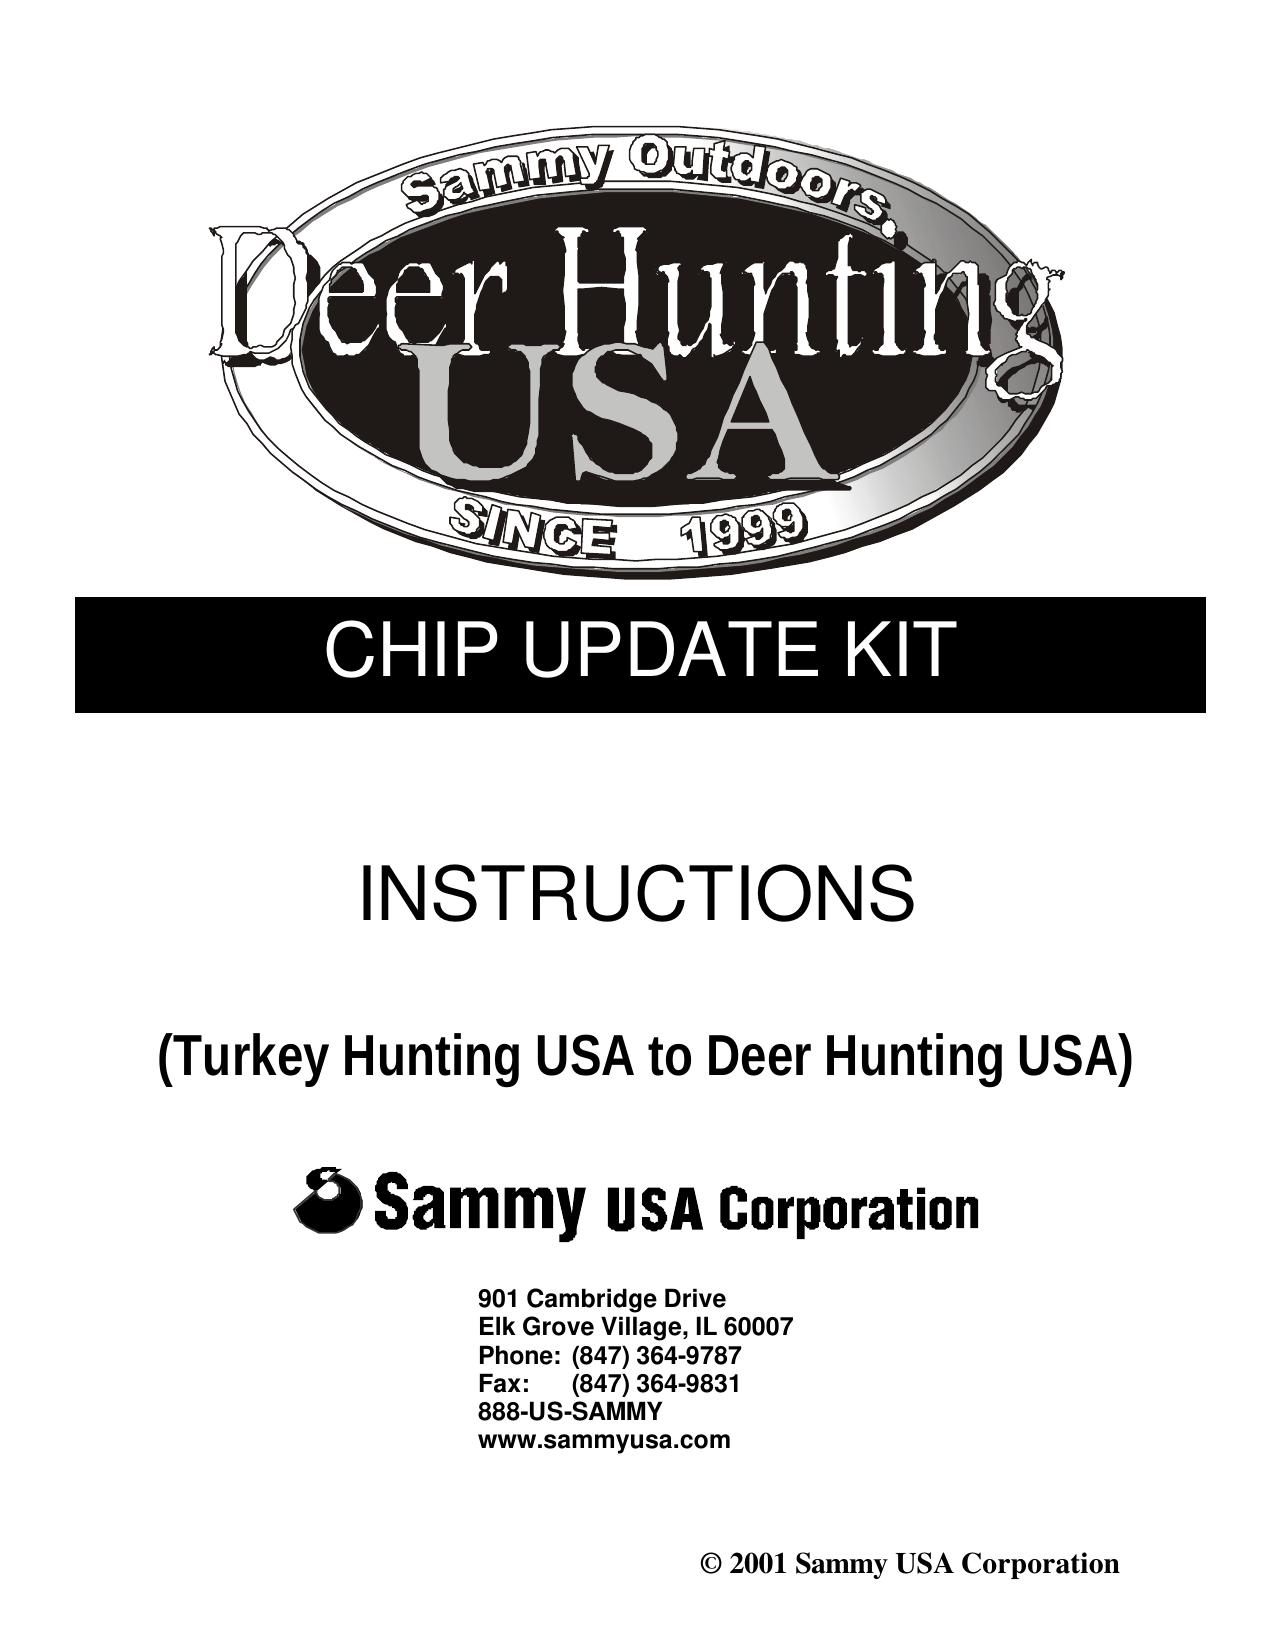 080801 Deer Hunting USA Chipupdate KIT Manual.pub